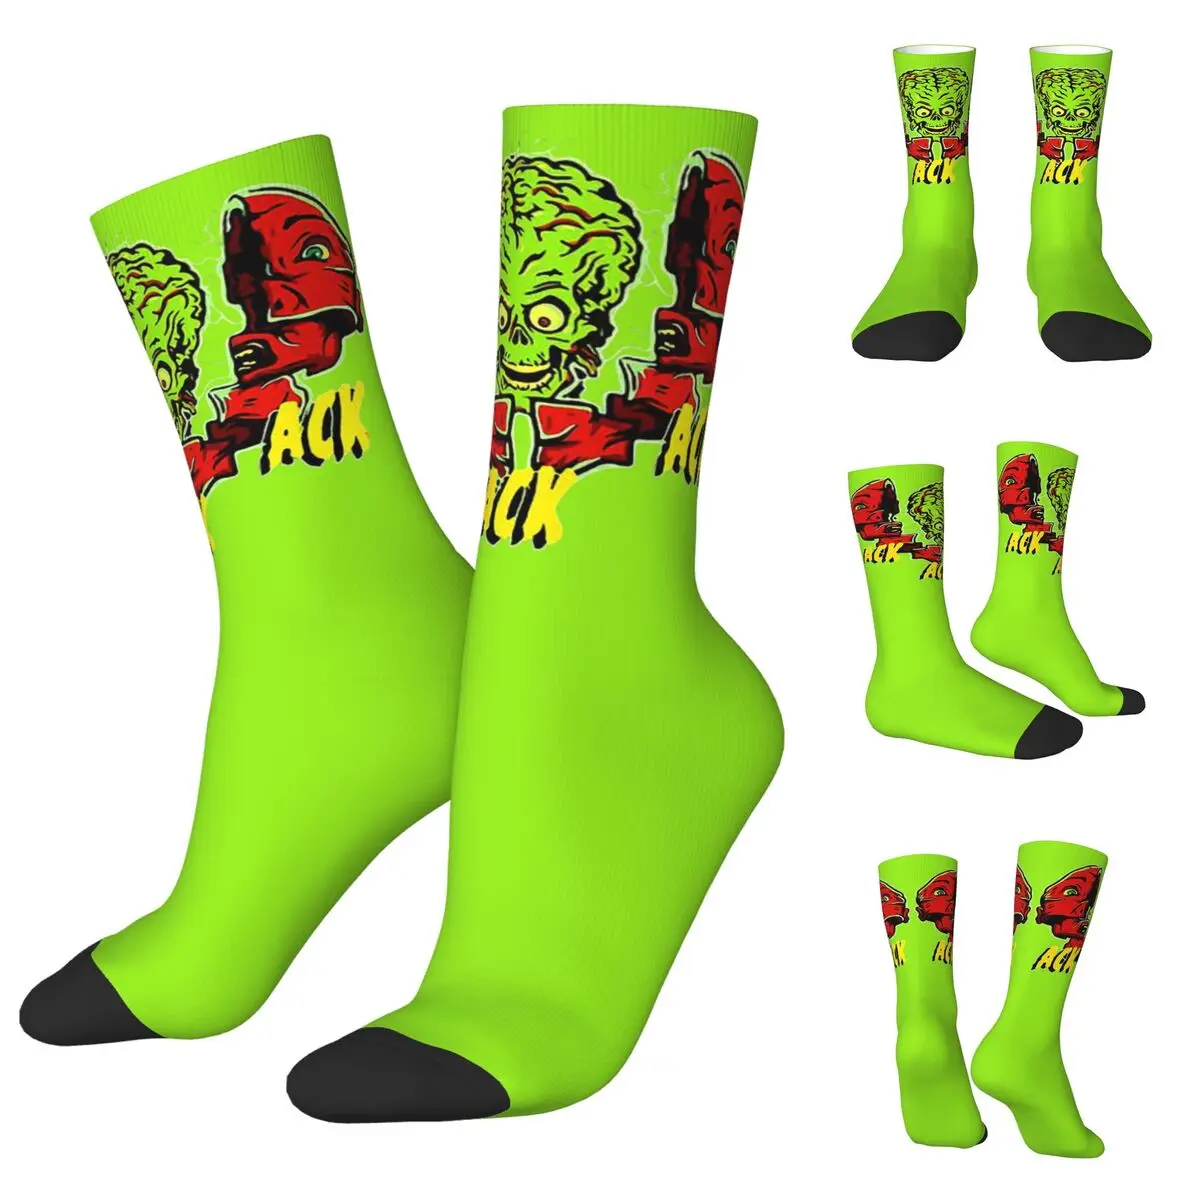 

Ack Mars Attacks Unisex Socks,Cycling 3D Print Happy Socks Street Style Crazy Sock